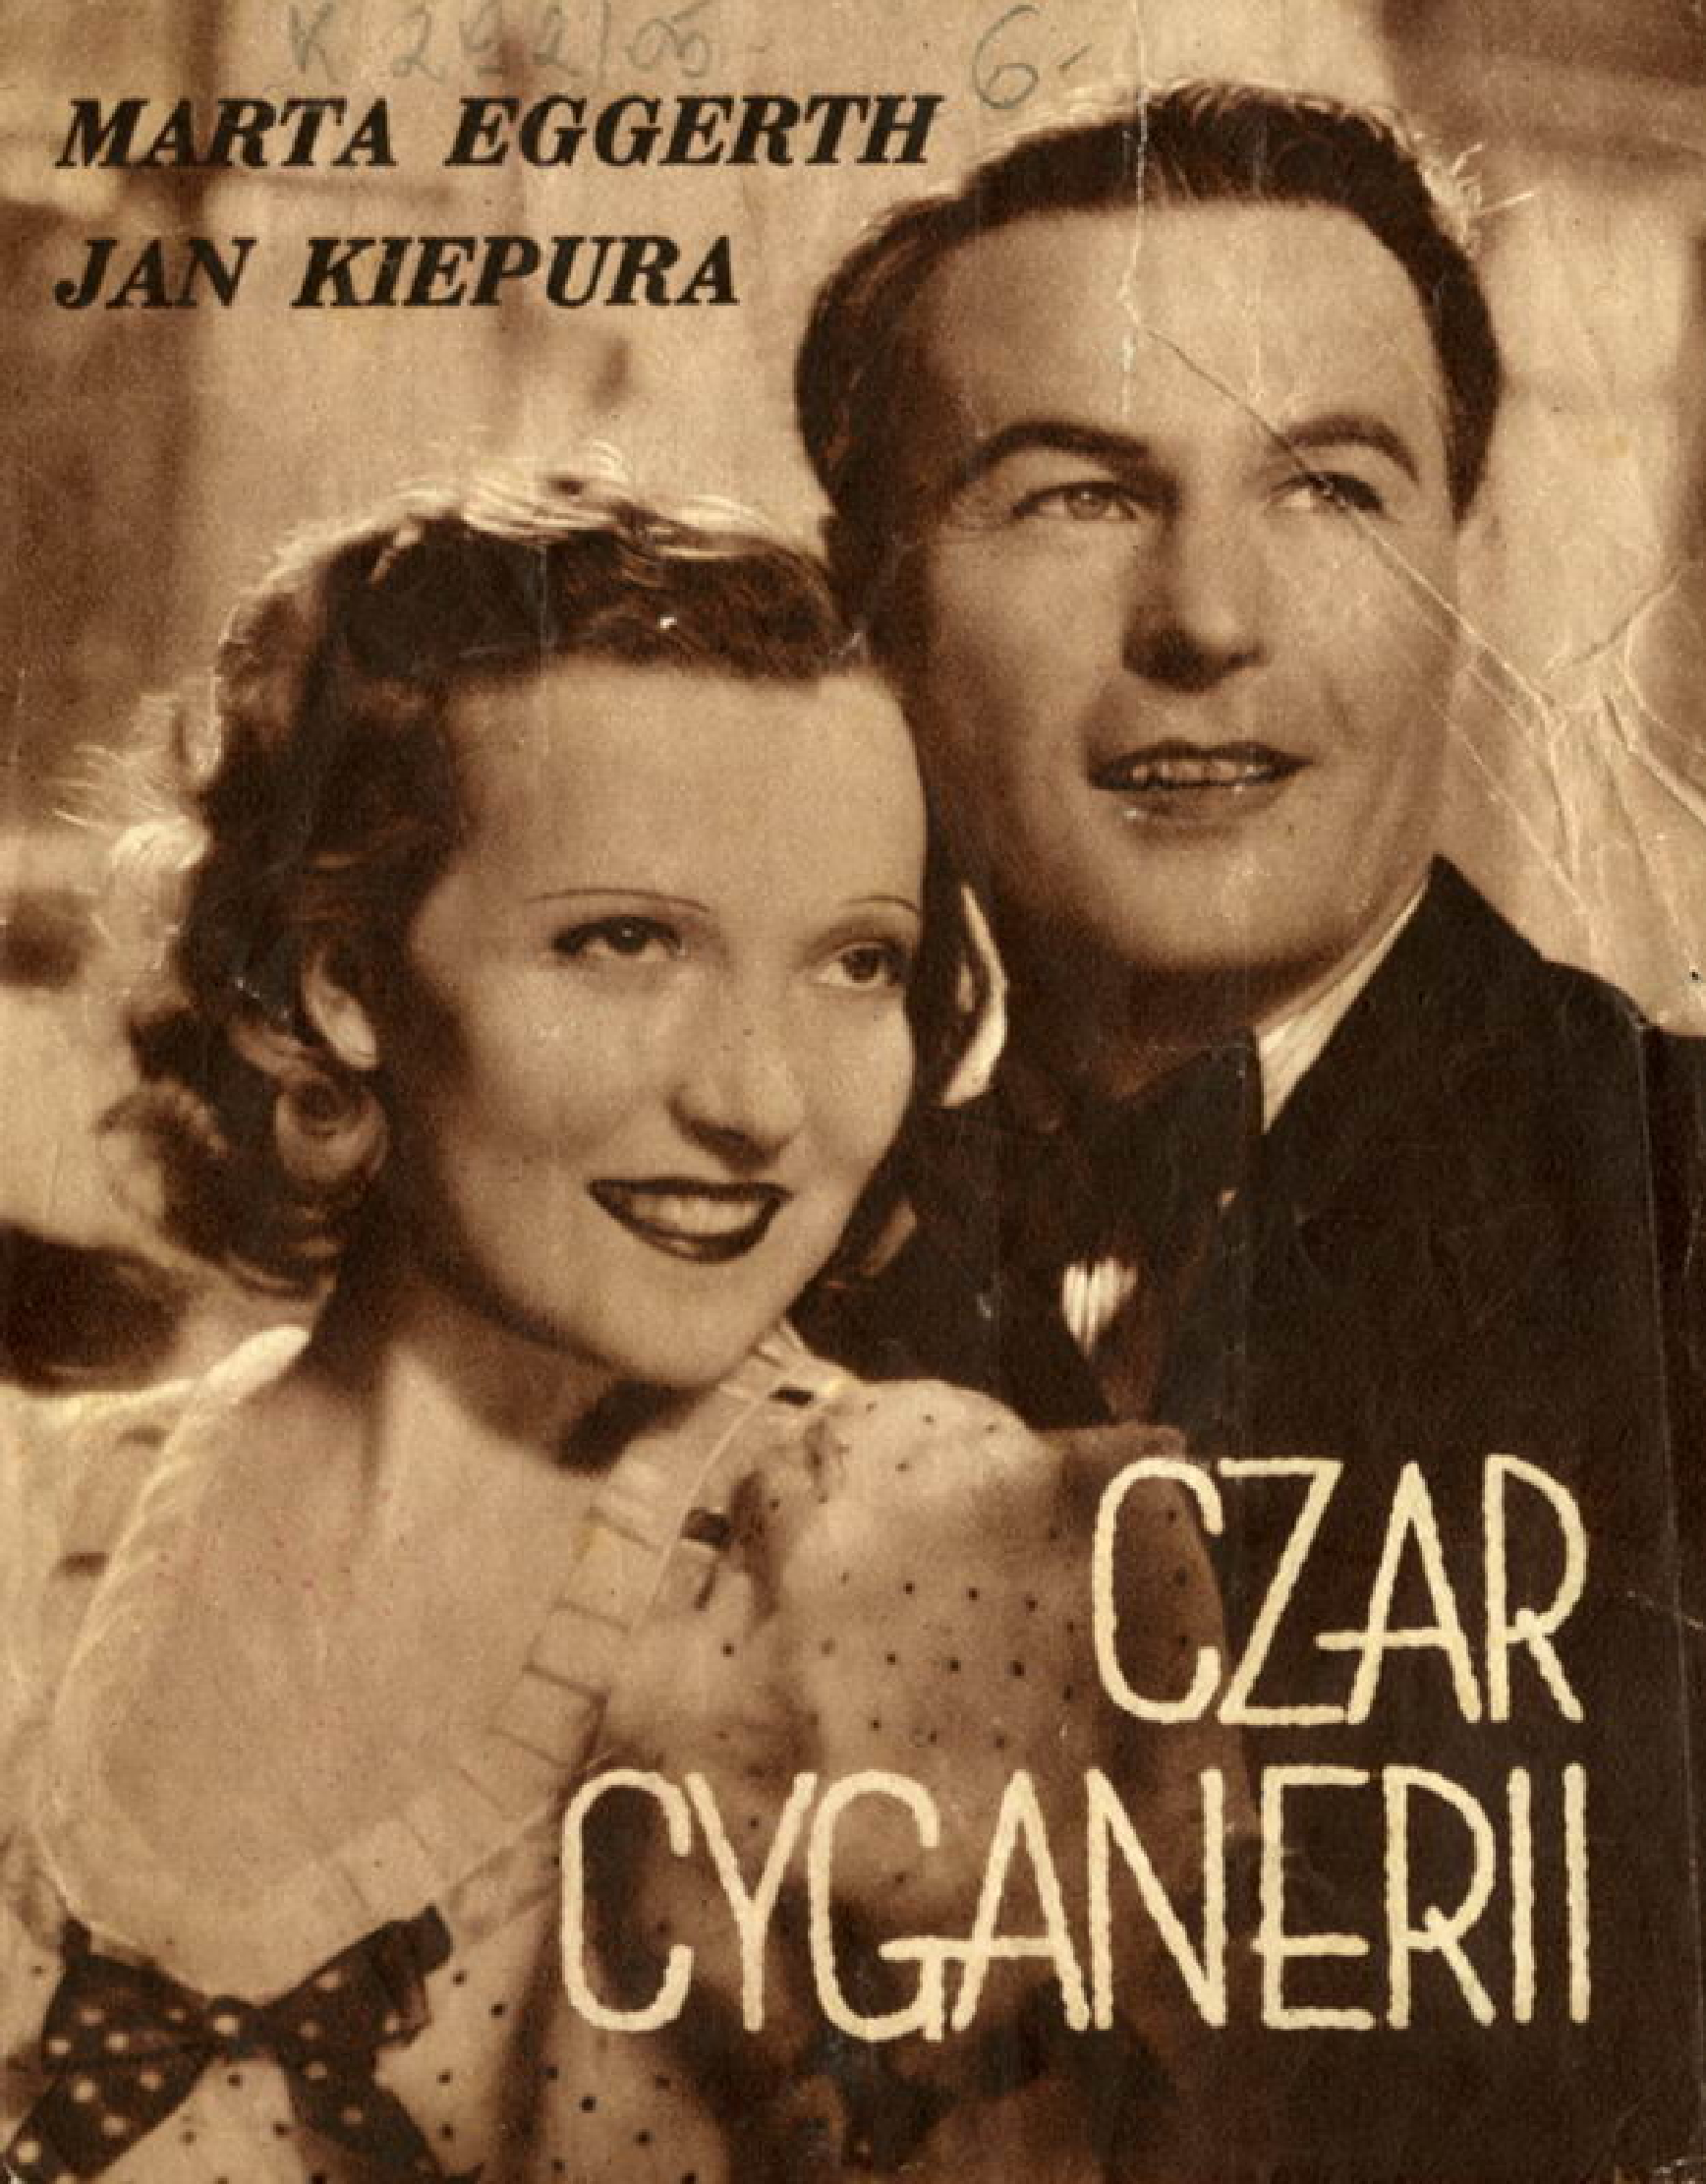 Okładka prospektu reklamowego filmu pt. "Czar Cyganerii", 1937, Marta Eggerth, Jan Kiepura, mbc.cyfrowemazowsze.pl